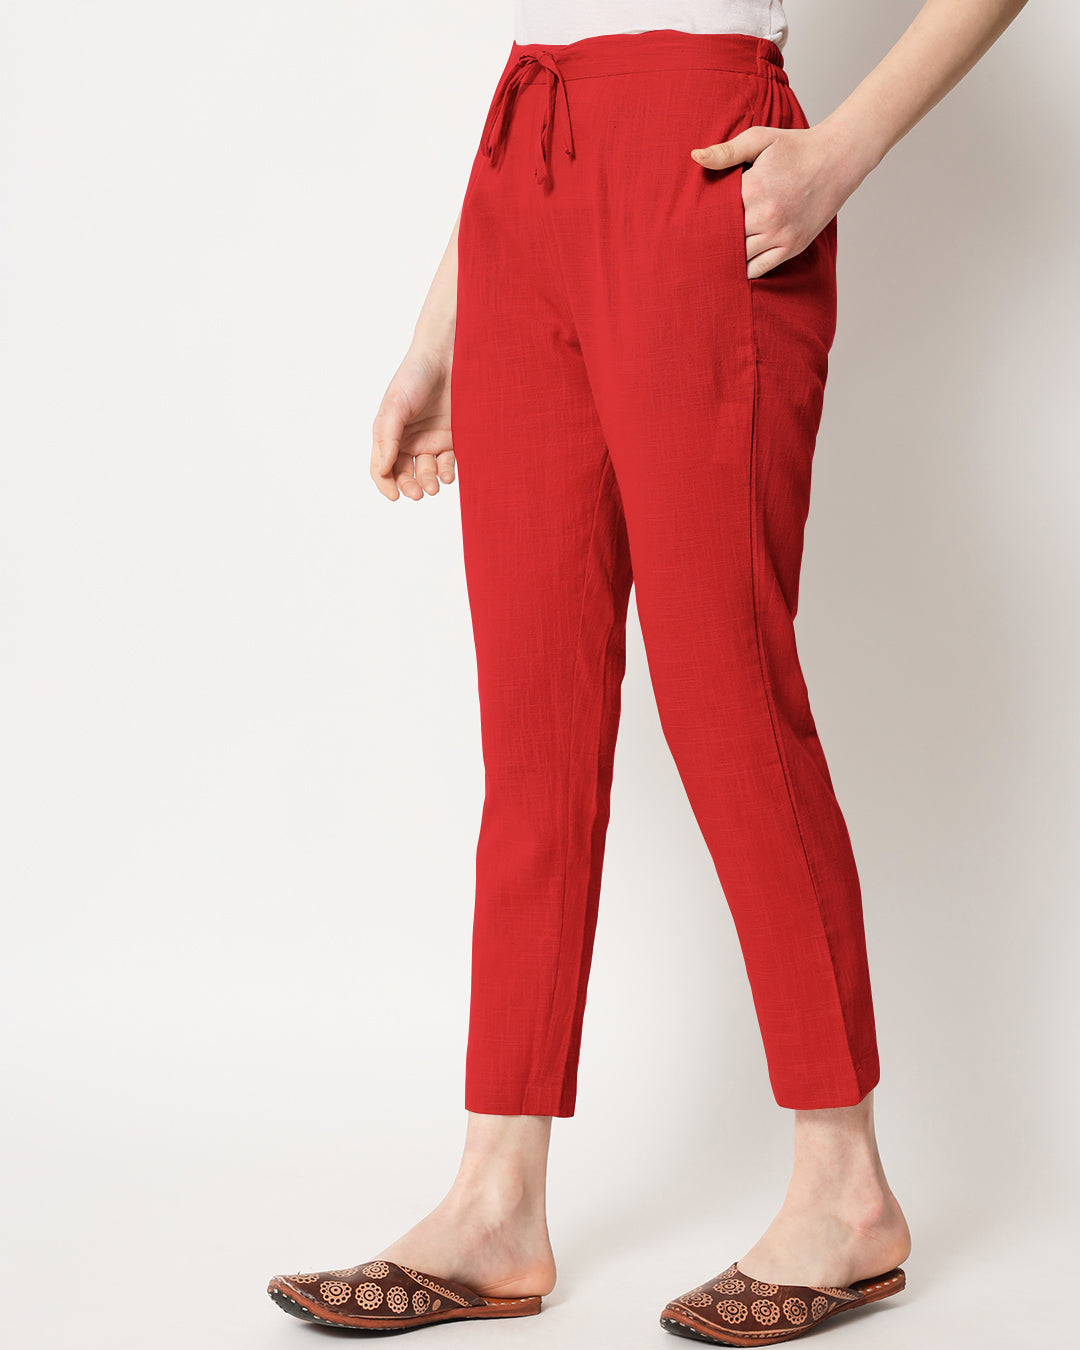 Trend Alaçatı Stili Pants - Red - Cigarette pants - Trendyol